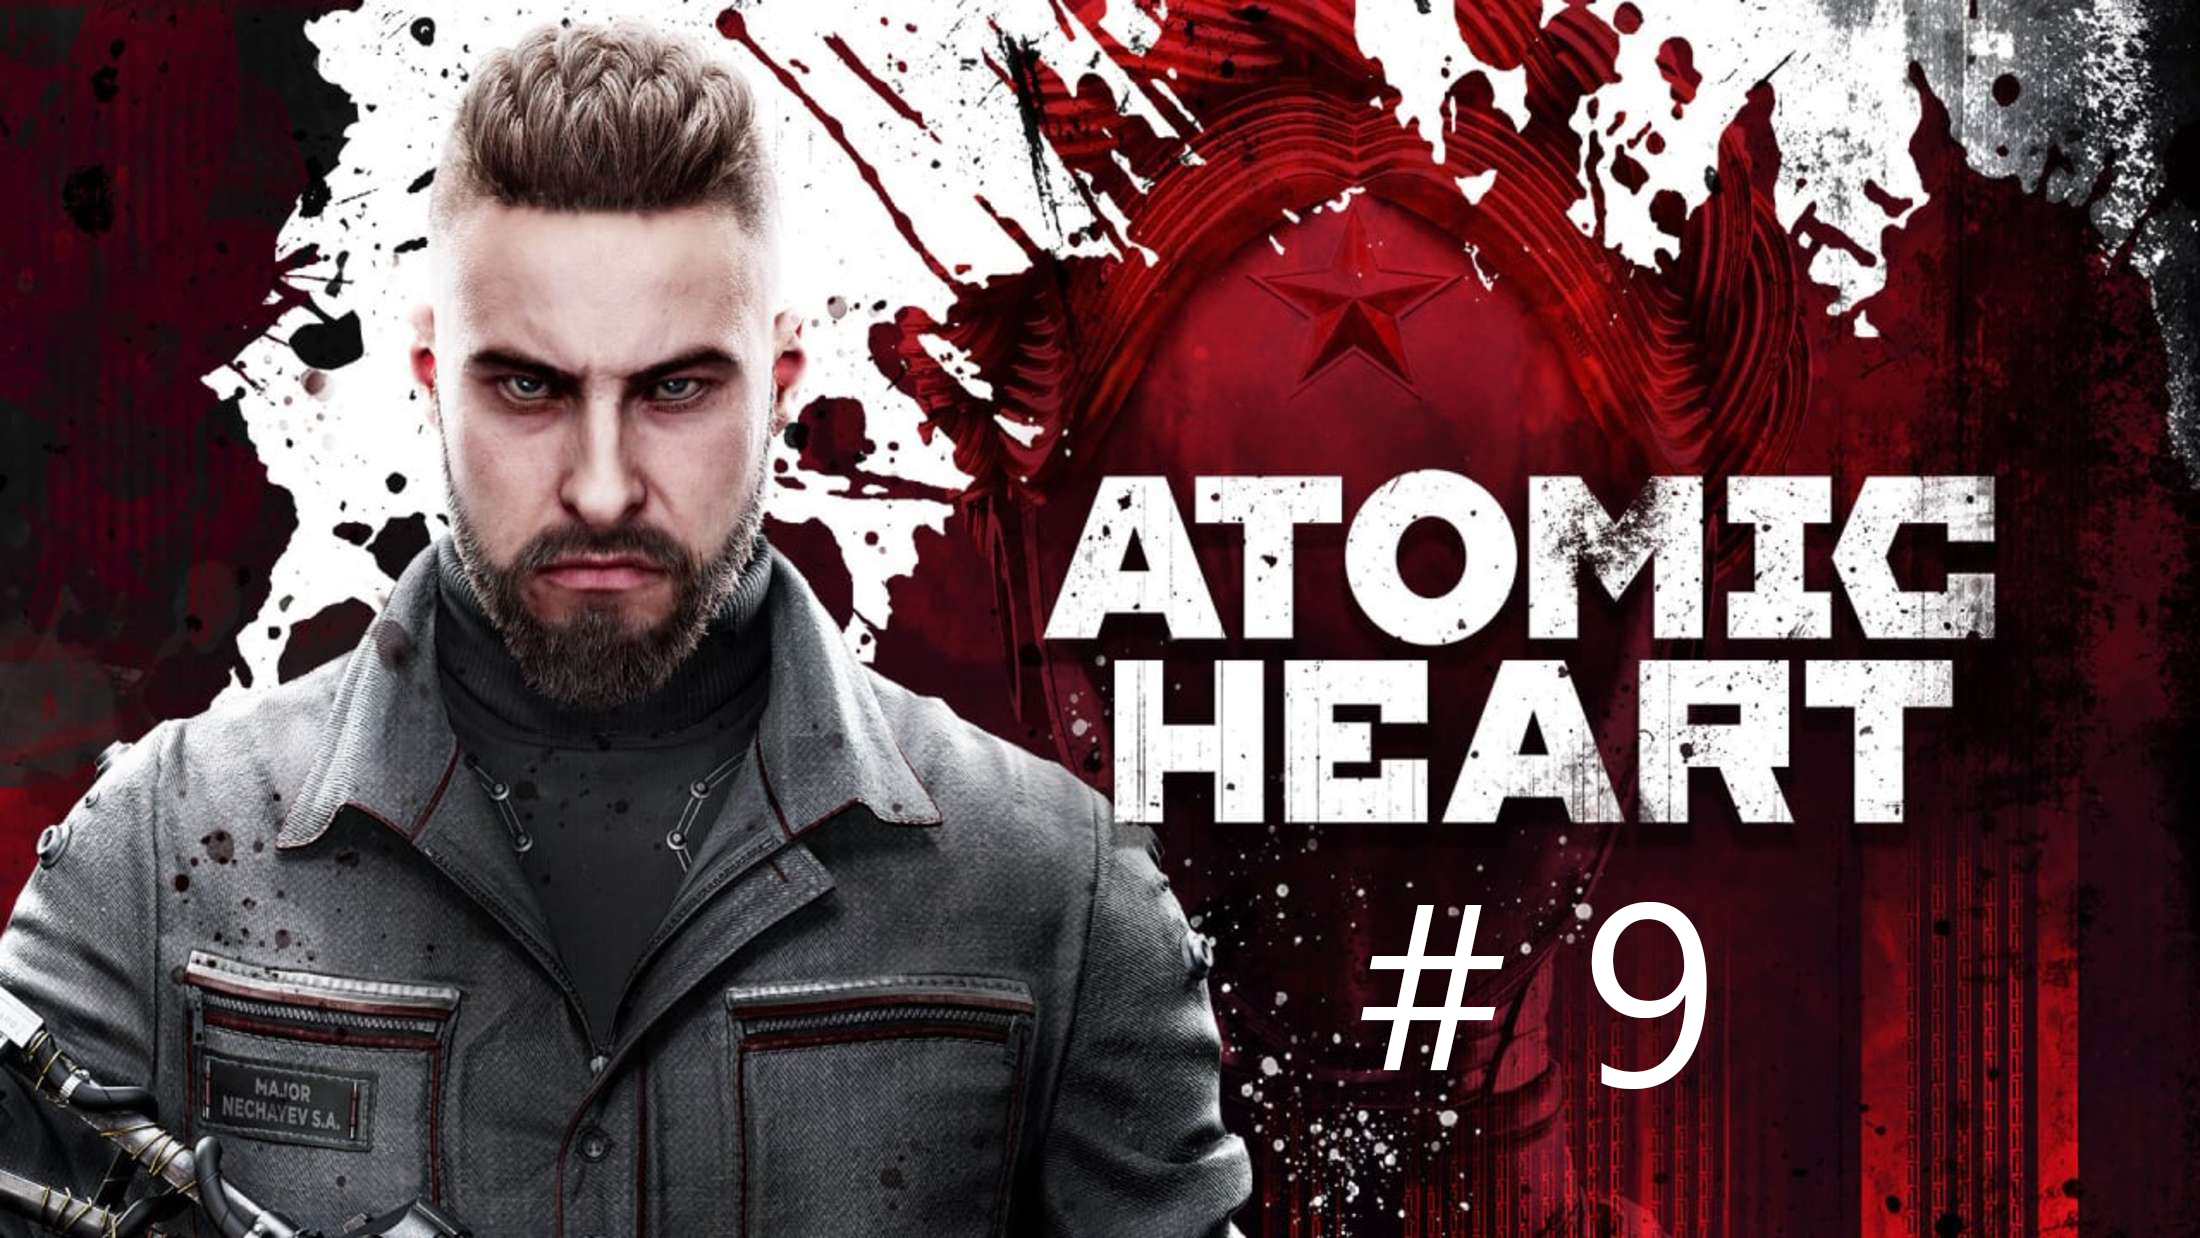 Atomic Heart # 9